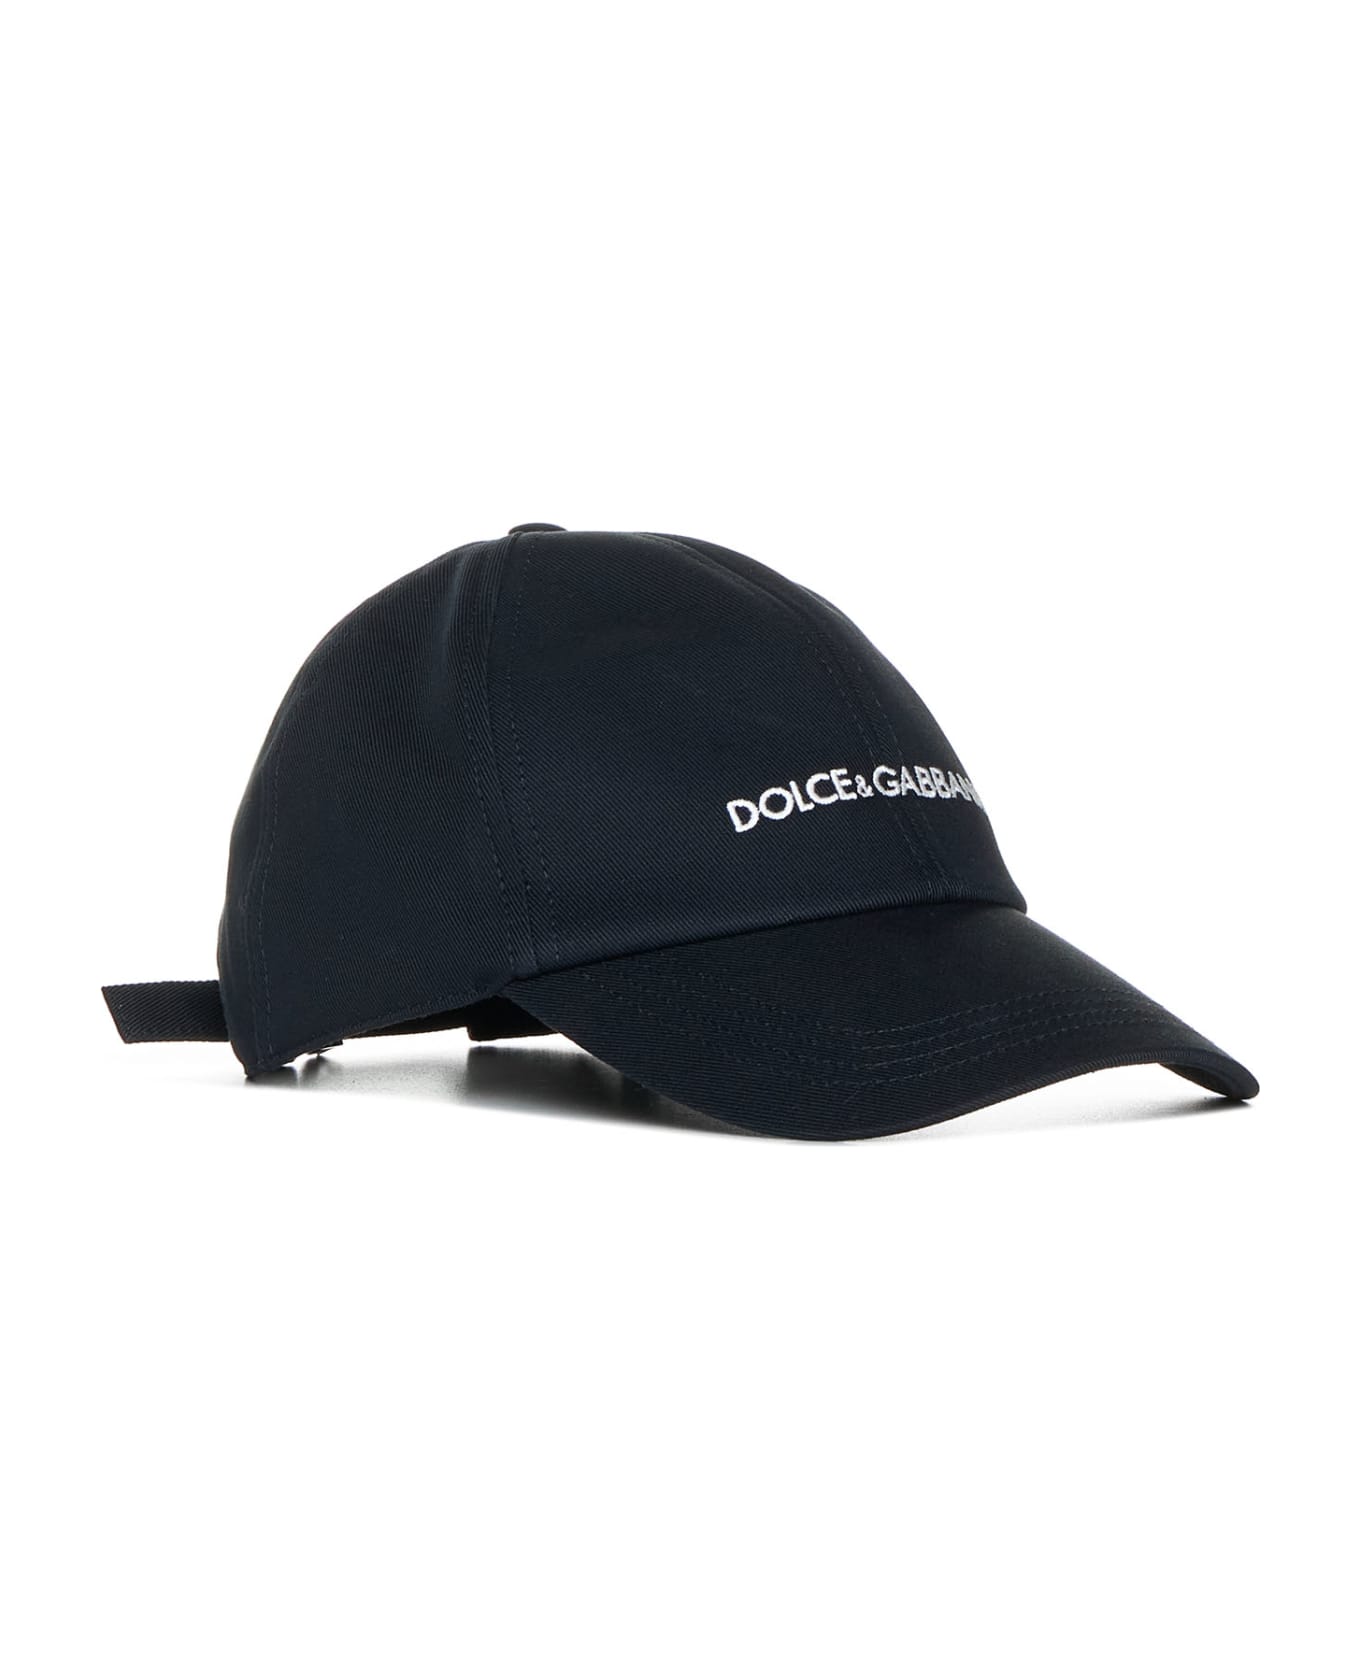 Dolce & Gabbana Logo Embroidered Baseball Cap - Black